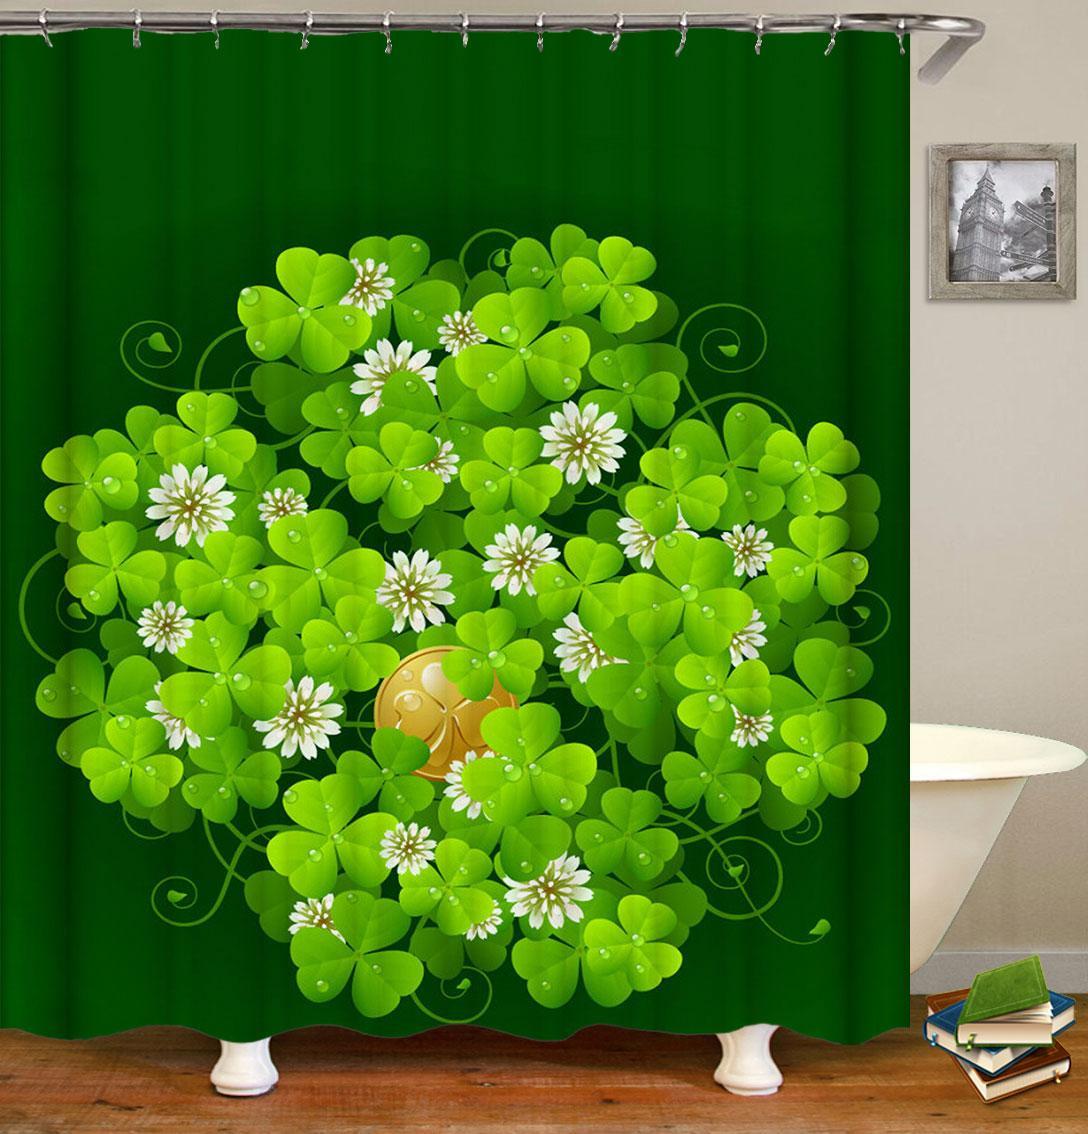 Green Clovers and Clover Flowers Shower Curtain 120cm x 180cm + 75cm x 45cm Set